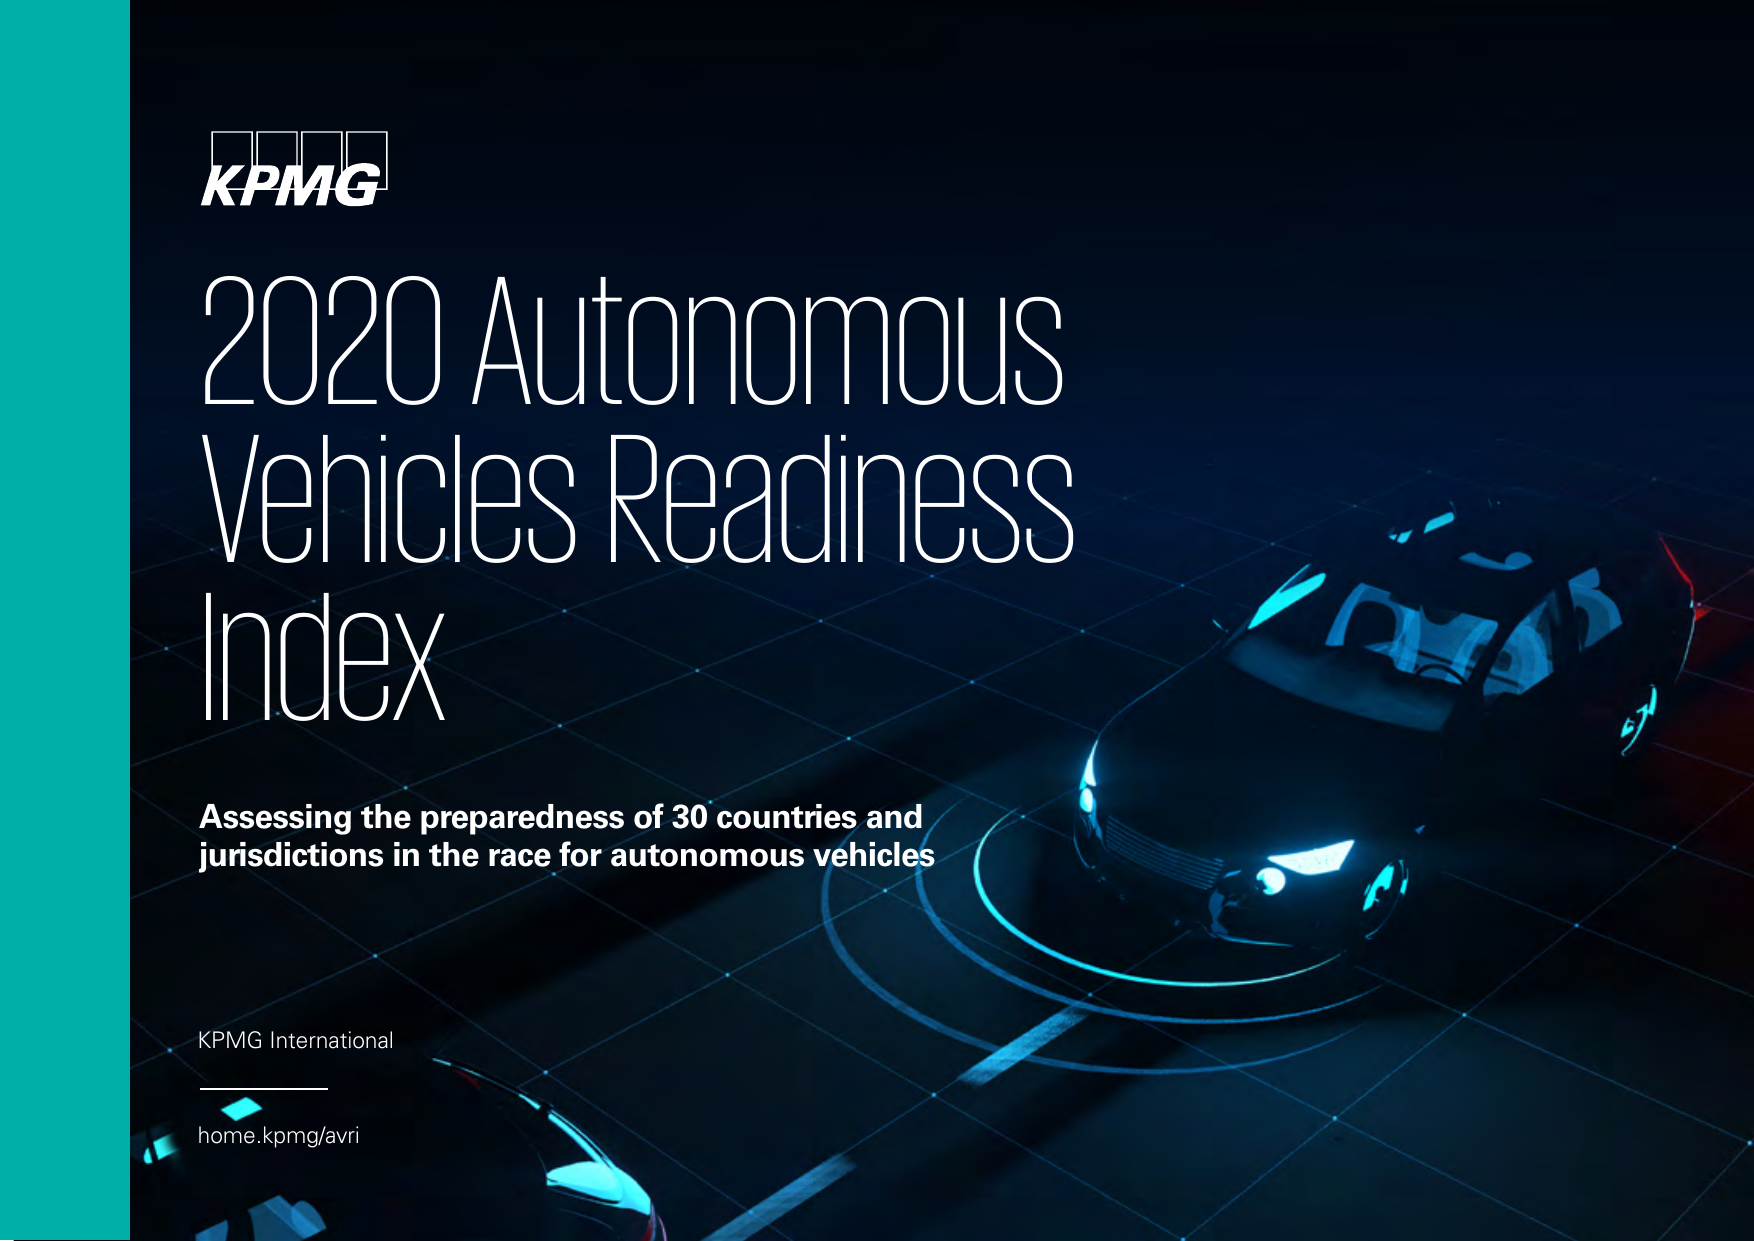 KPMG] 2020 Autonomous Vehicles Readiness Index